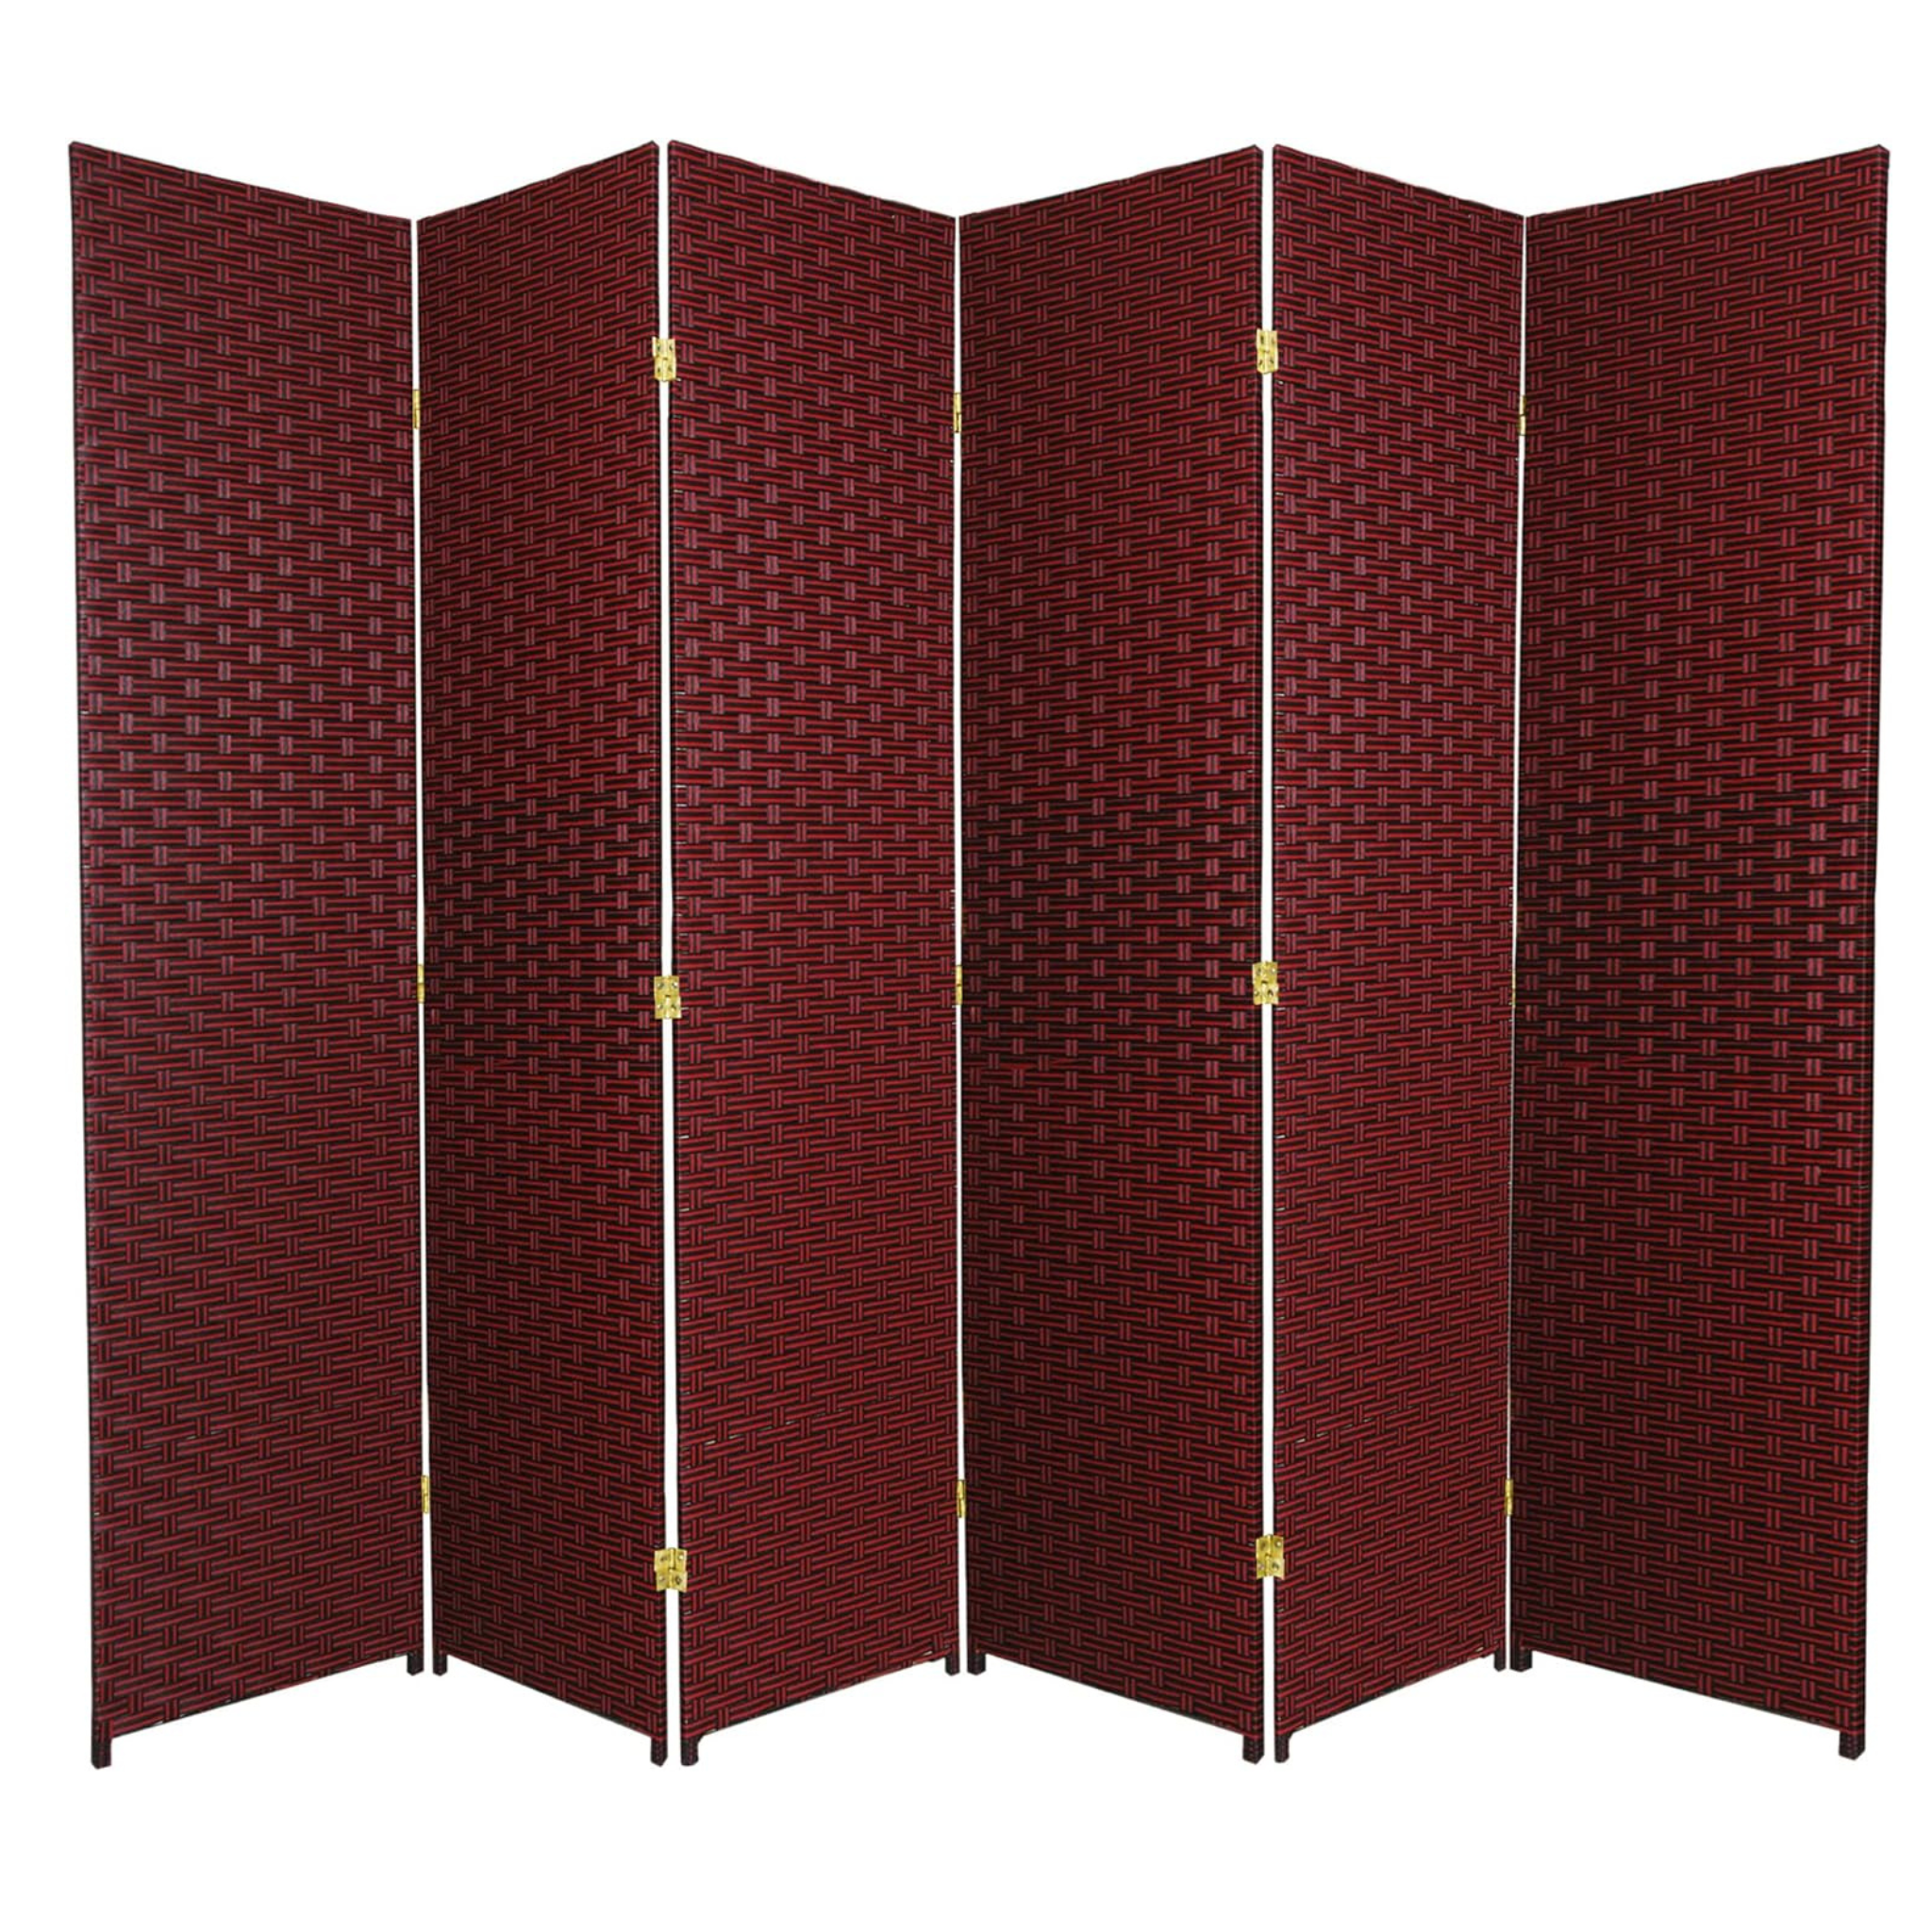 6 Panel Tall Woven Fiber Room Dividers